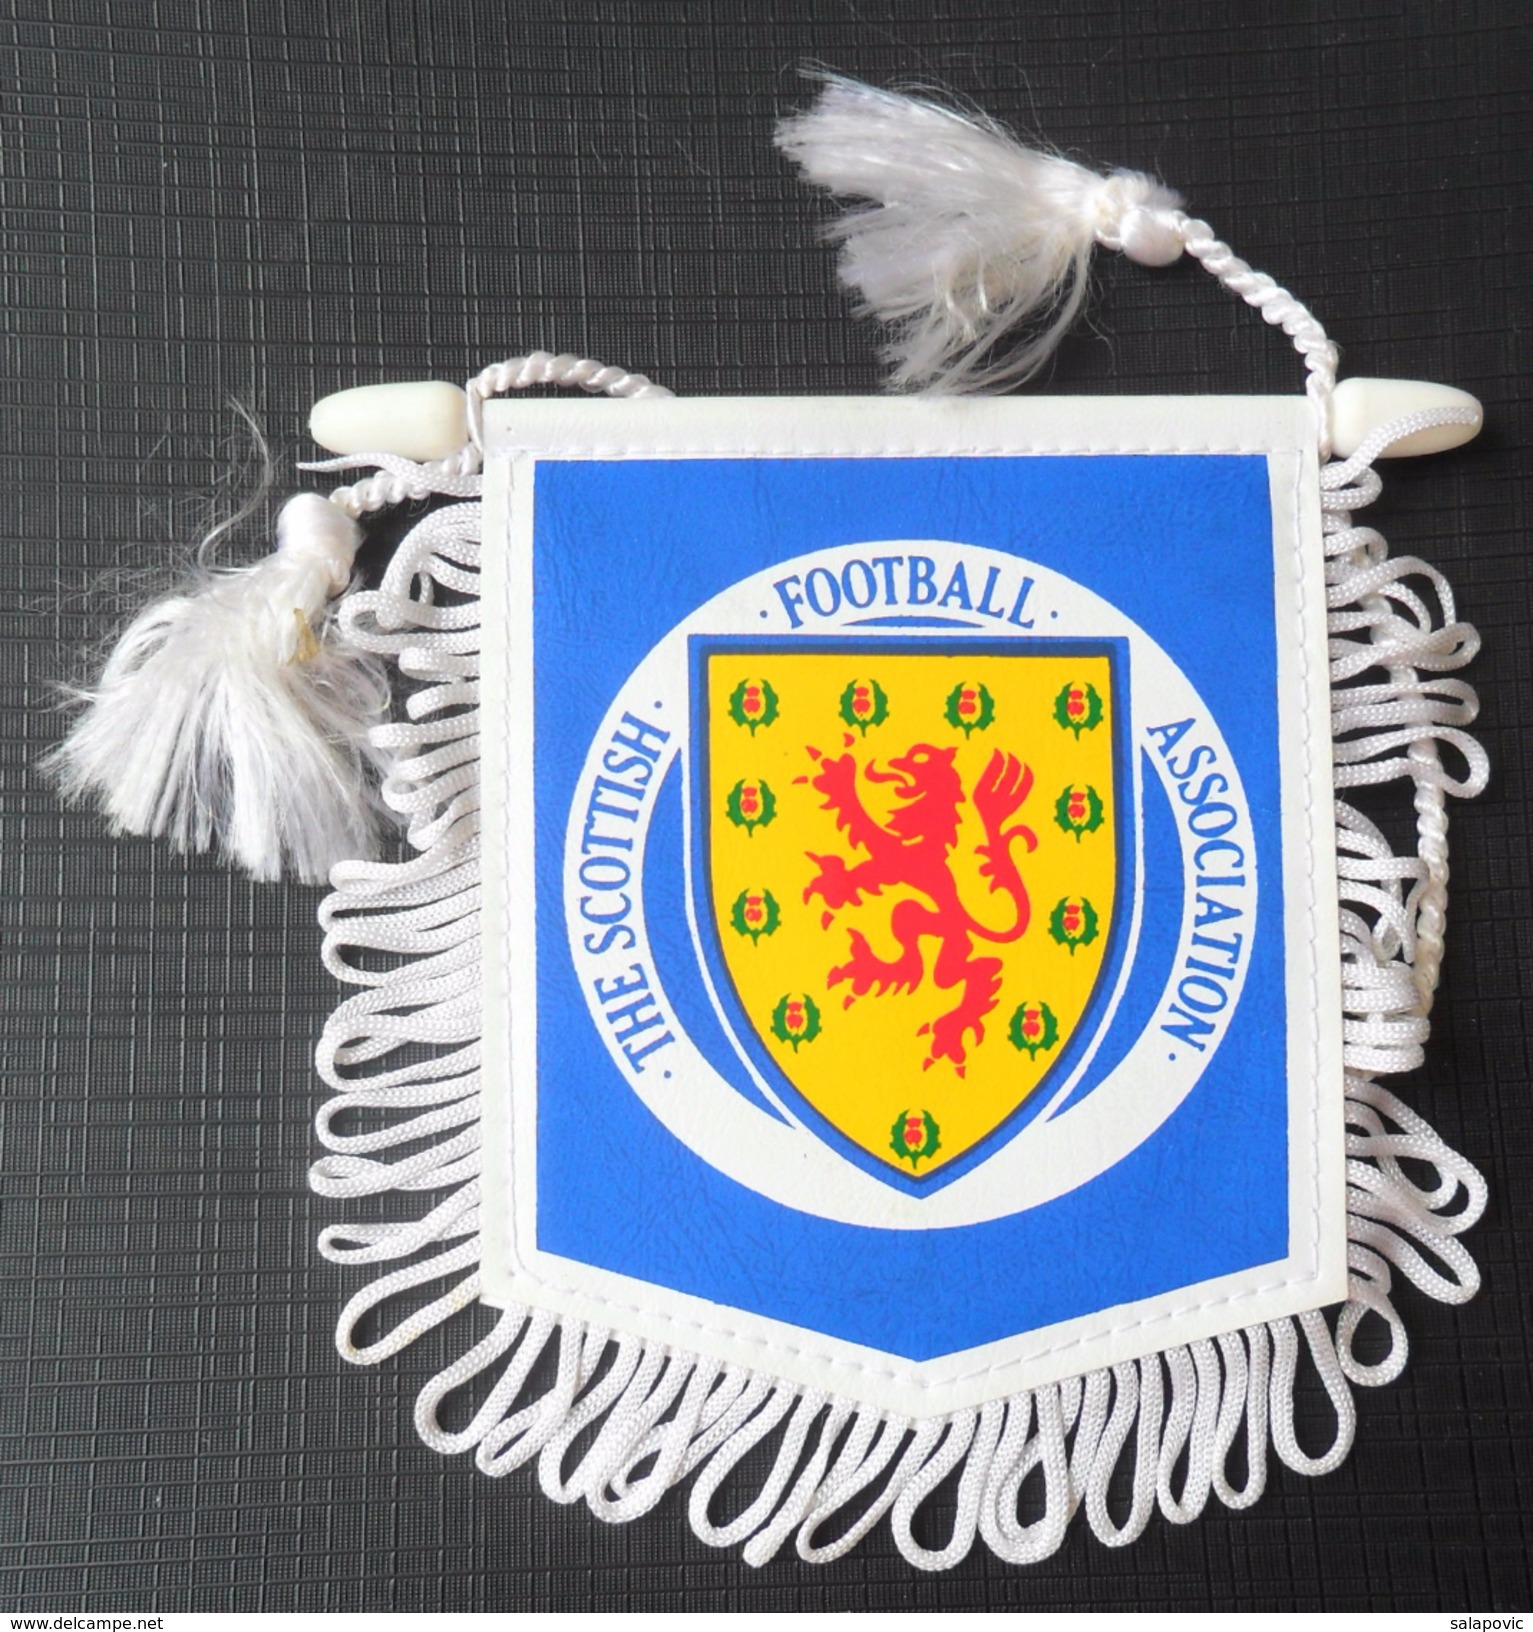 Scottish Football Association FOOTBALL CLUB, SOCCER / FUTBOL / CALCIO OLD PENNANT, SPORTS FLAG - Apparel, Souvenirs & Other